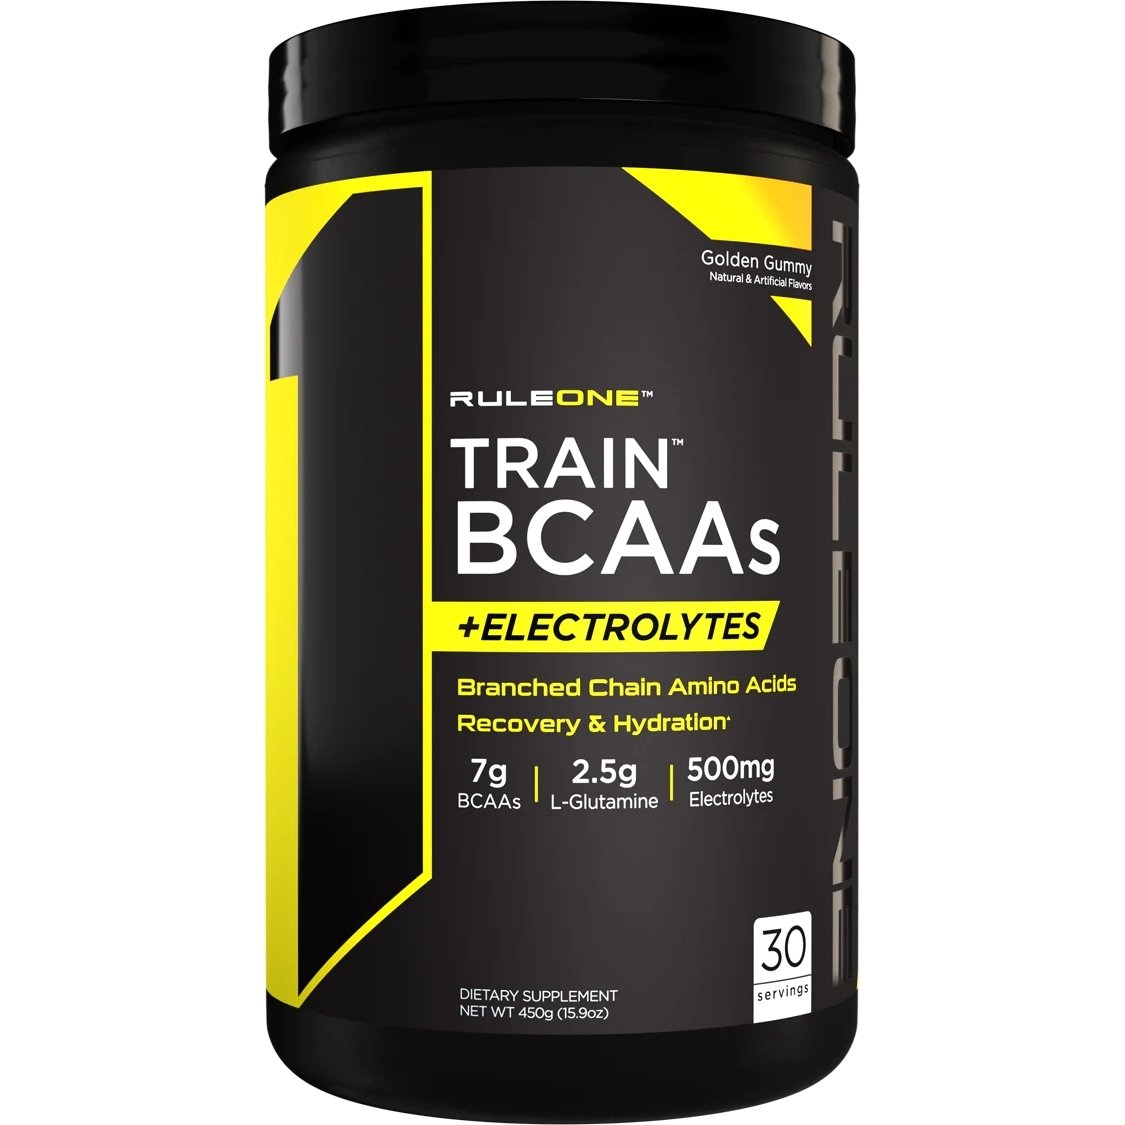 Аминокислота BCAA Rule 1 Train BCAAs + Electrolytes, 450 грамм Желейные конфеты,  ml, Rule One Proteins. BCAA. Weight Loss recovery Anti-catabolic properties Lean muscle mass 